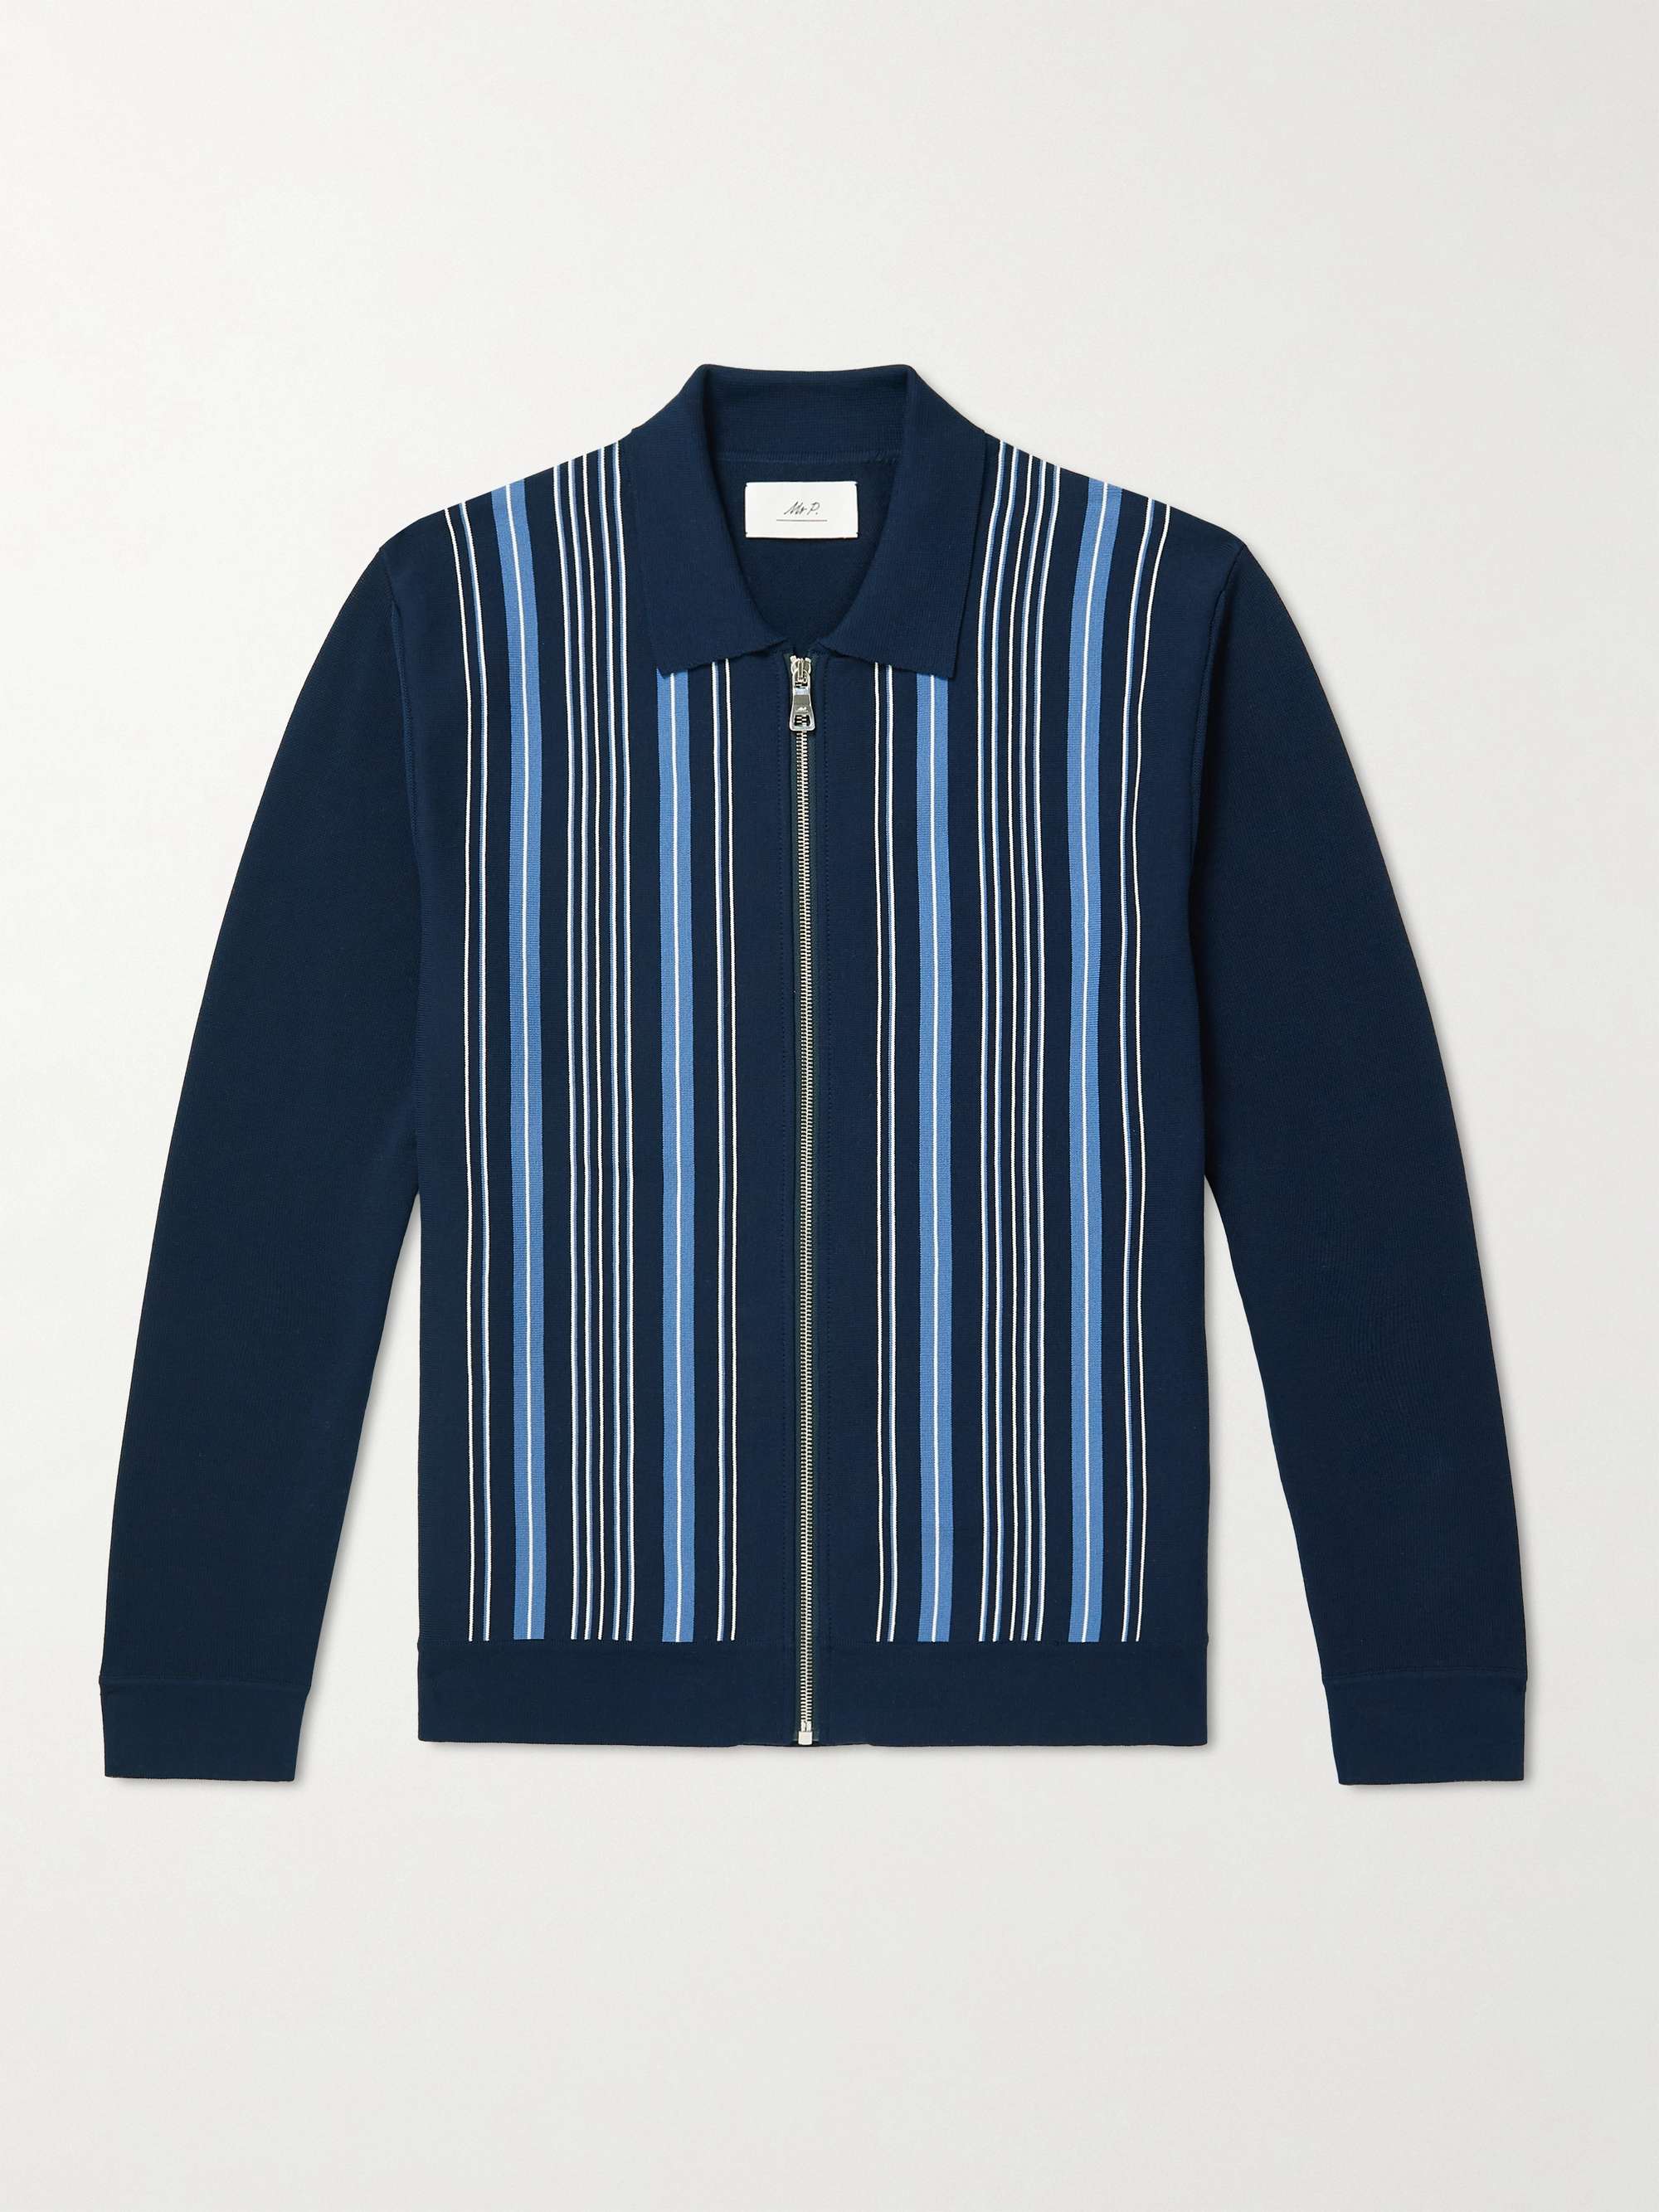 MR P. Striped Cotton Zip-Up Sweater